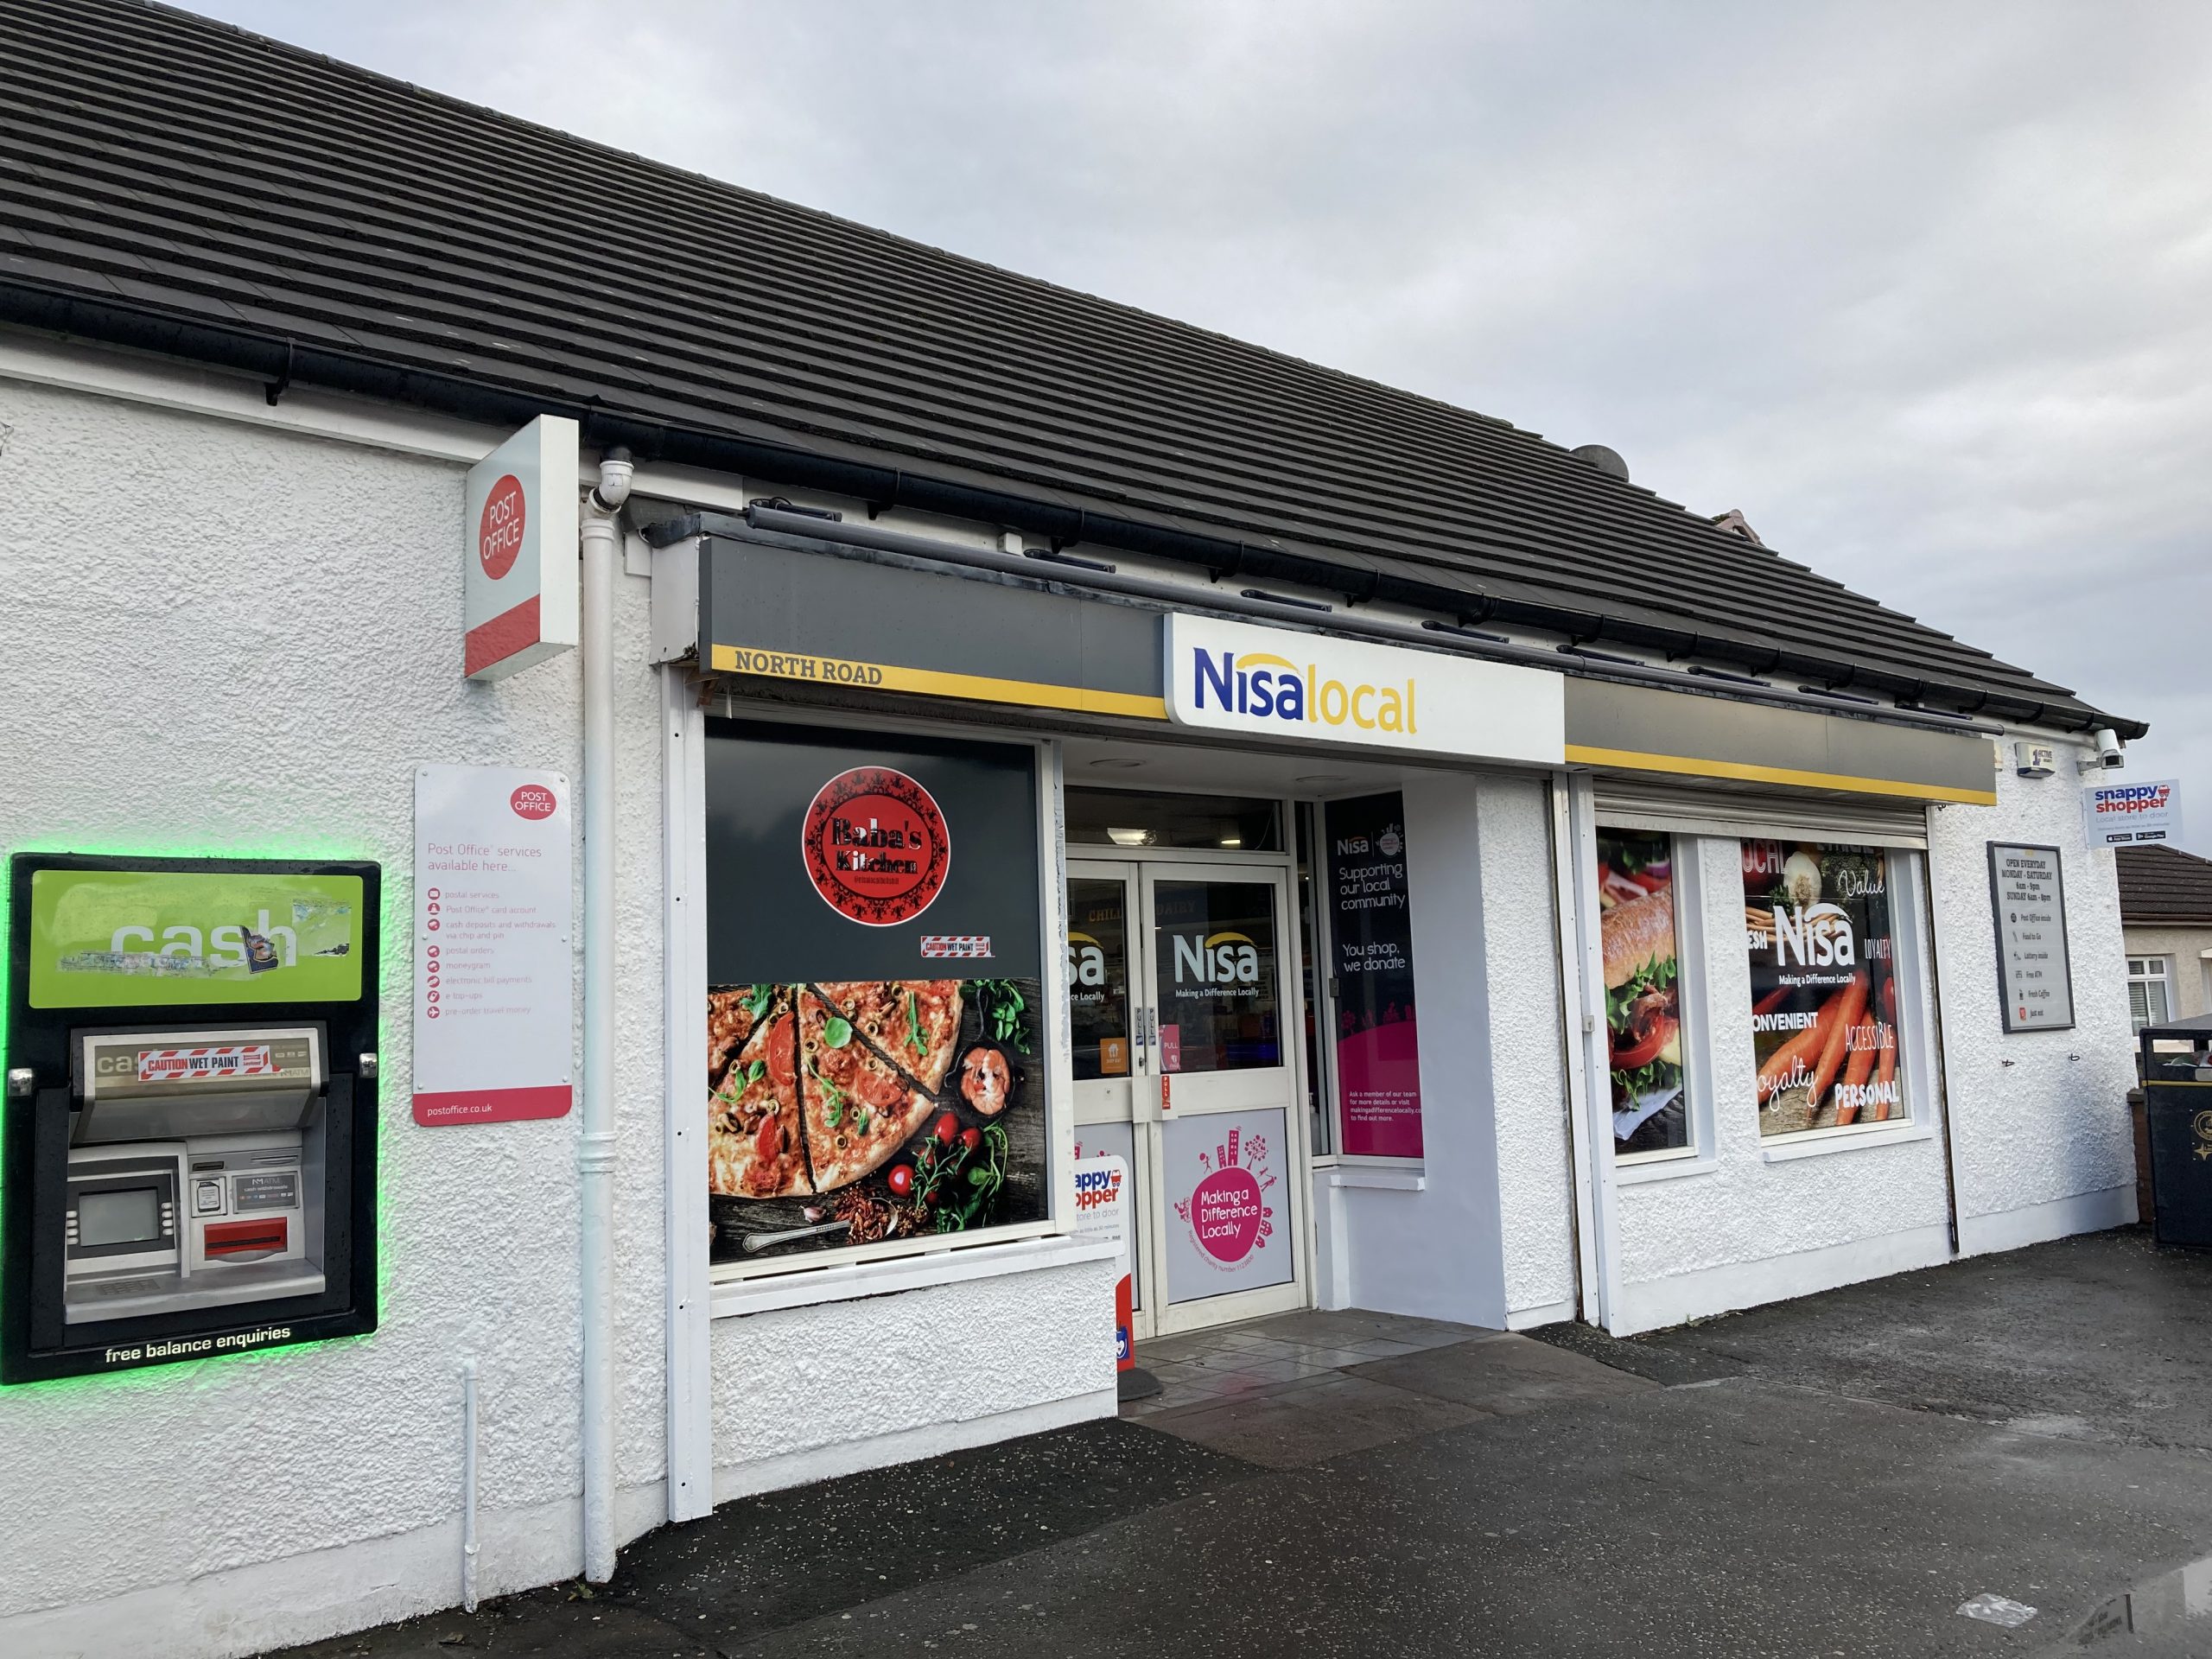 Glasgow Nisa store moves focus on fresh food